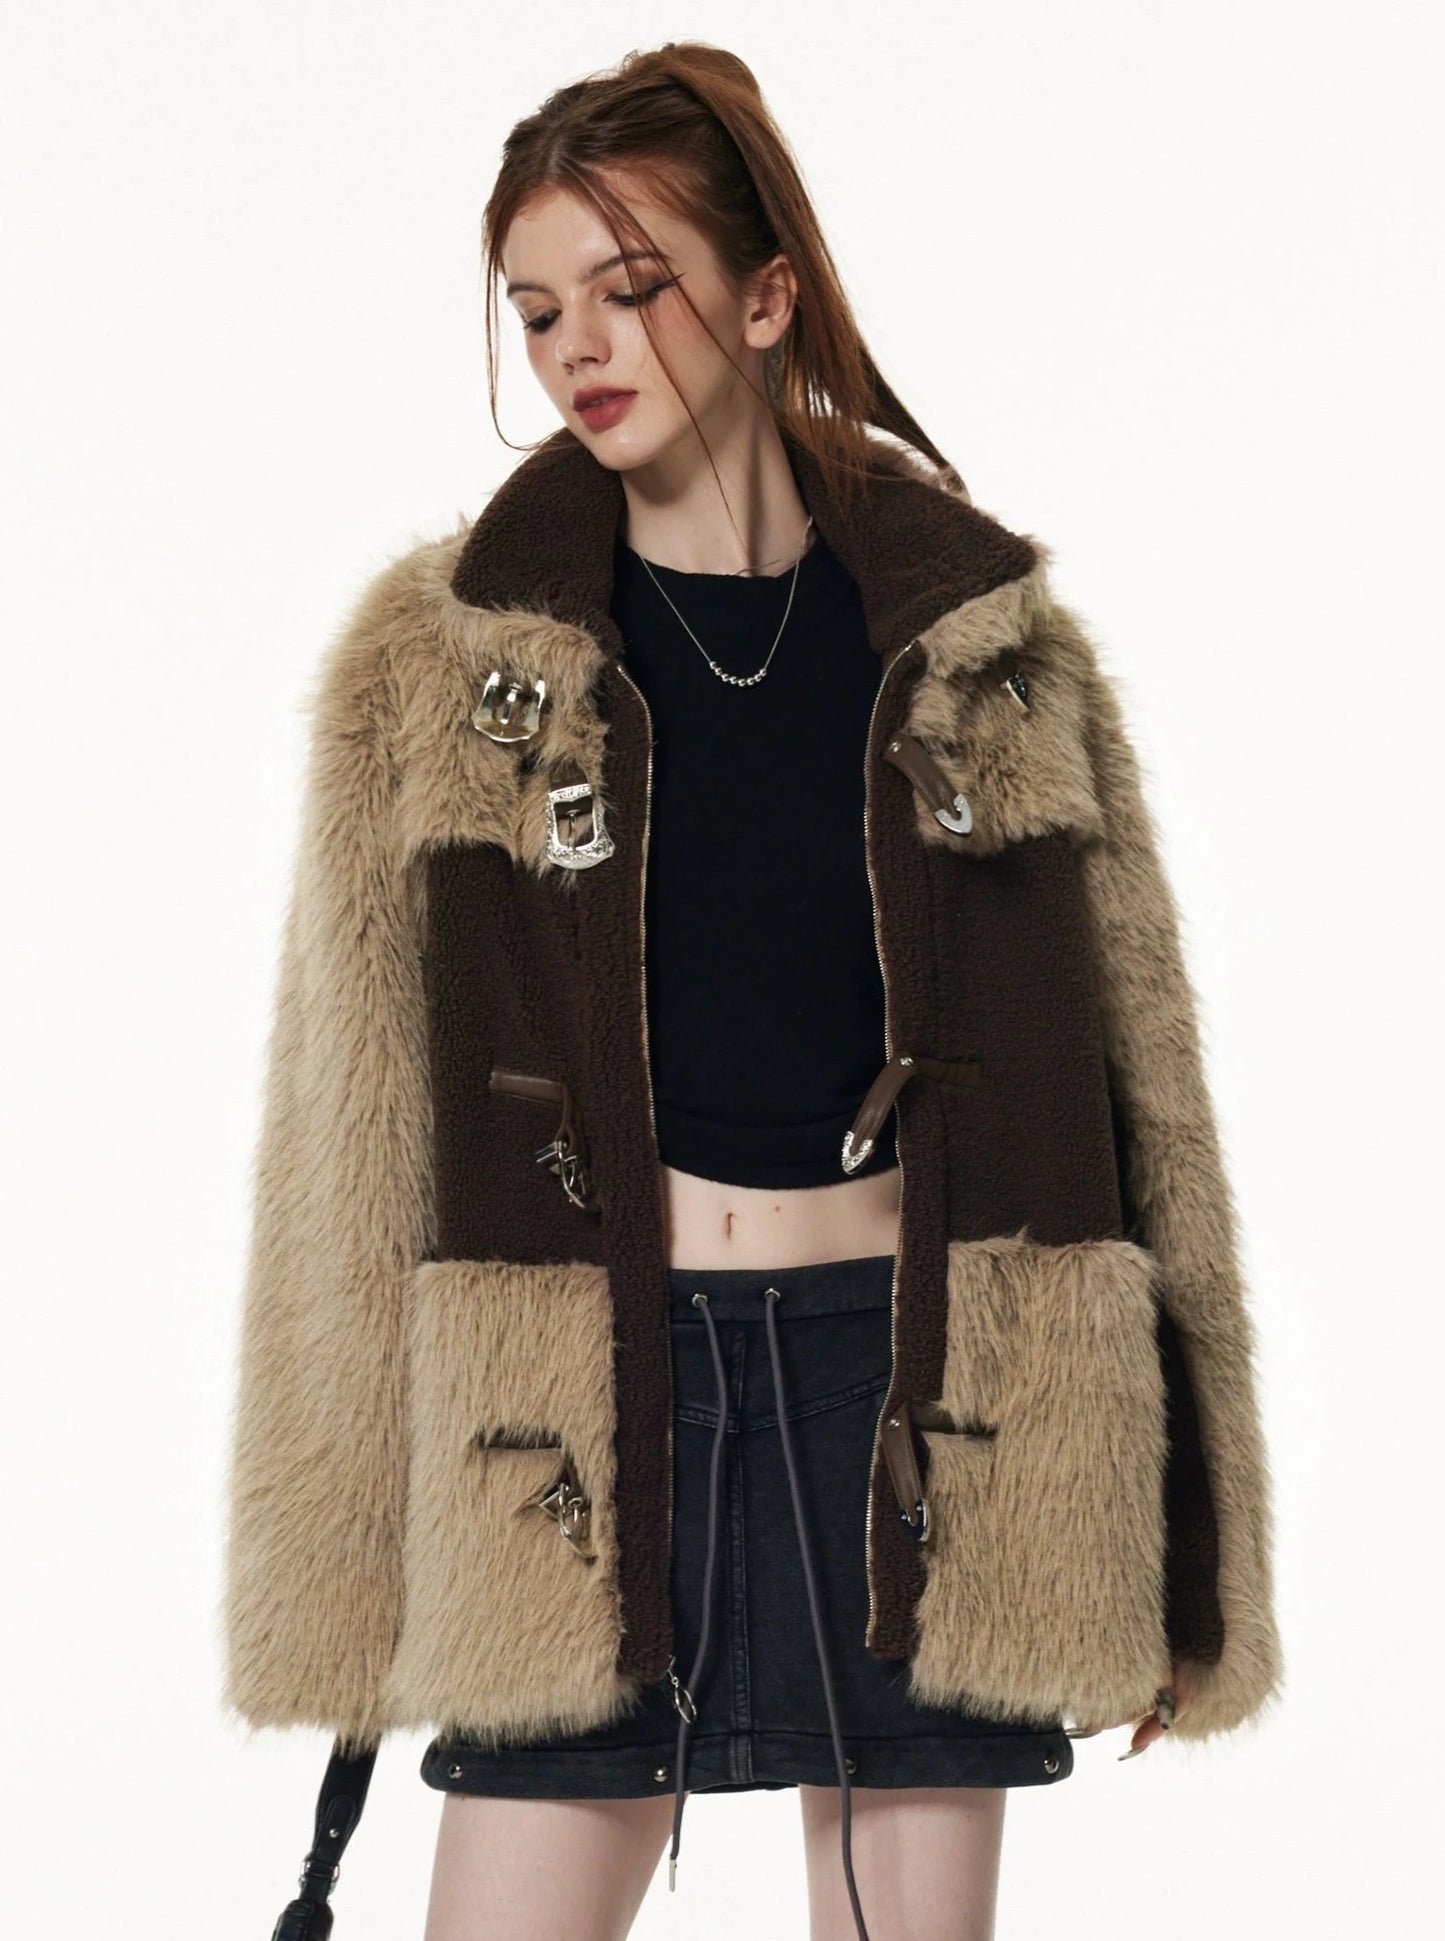 Wool stitching imitation mink fur coat jacket